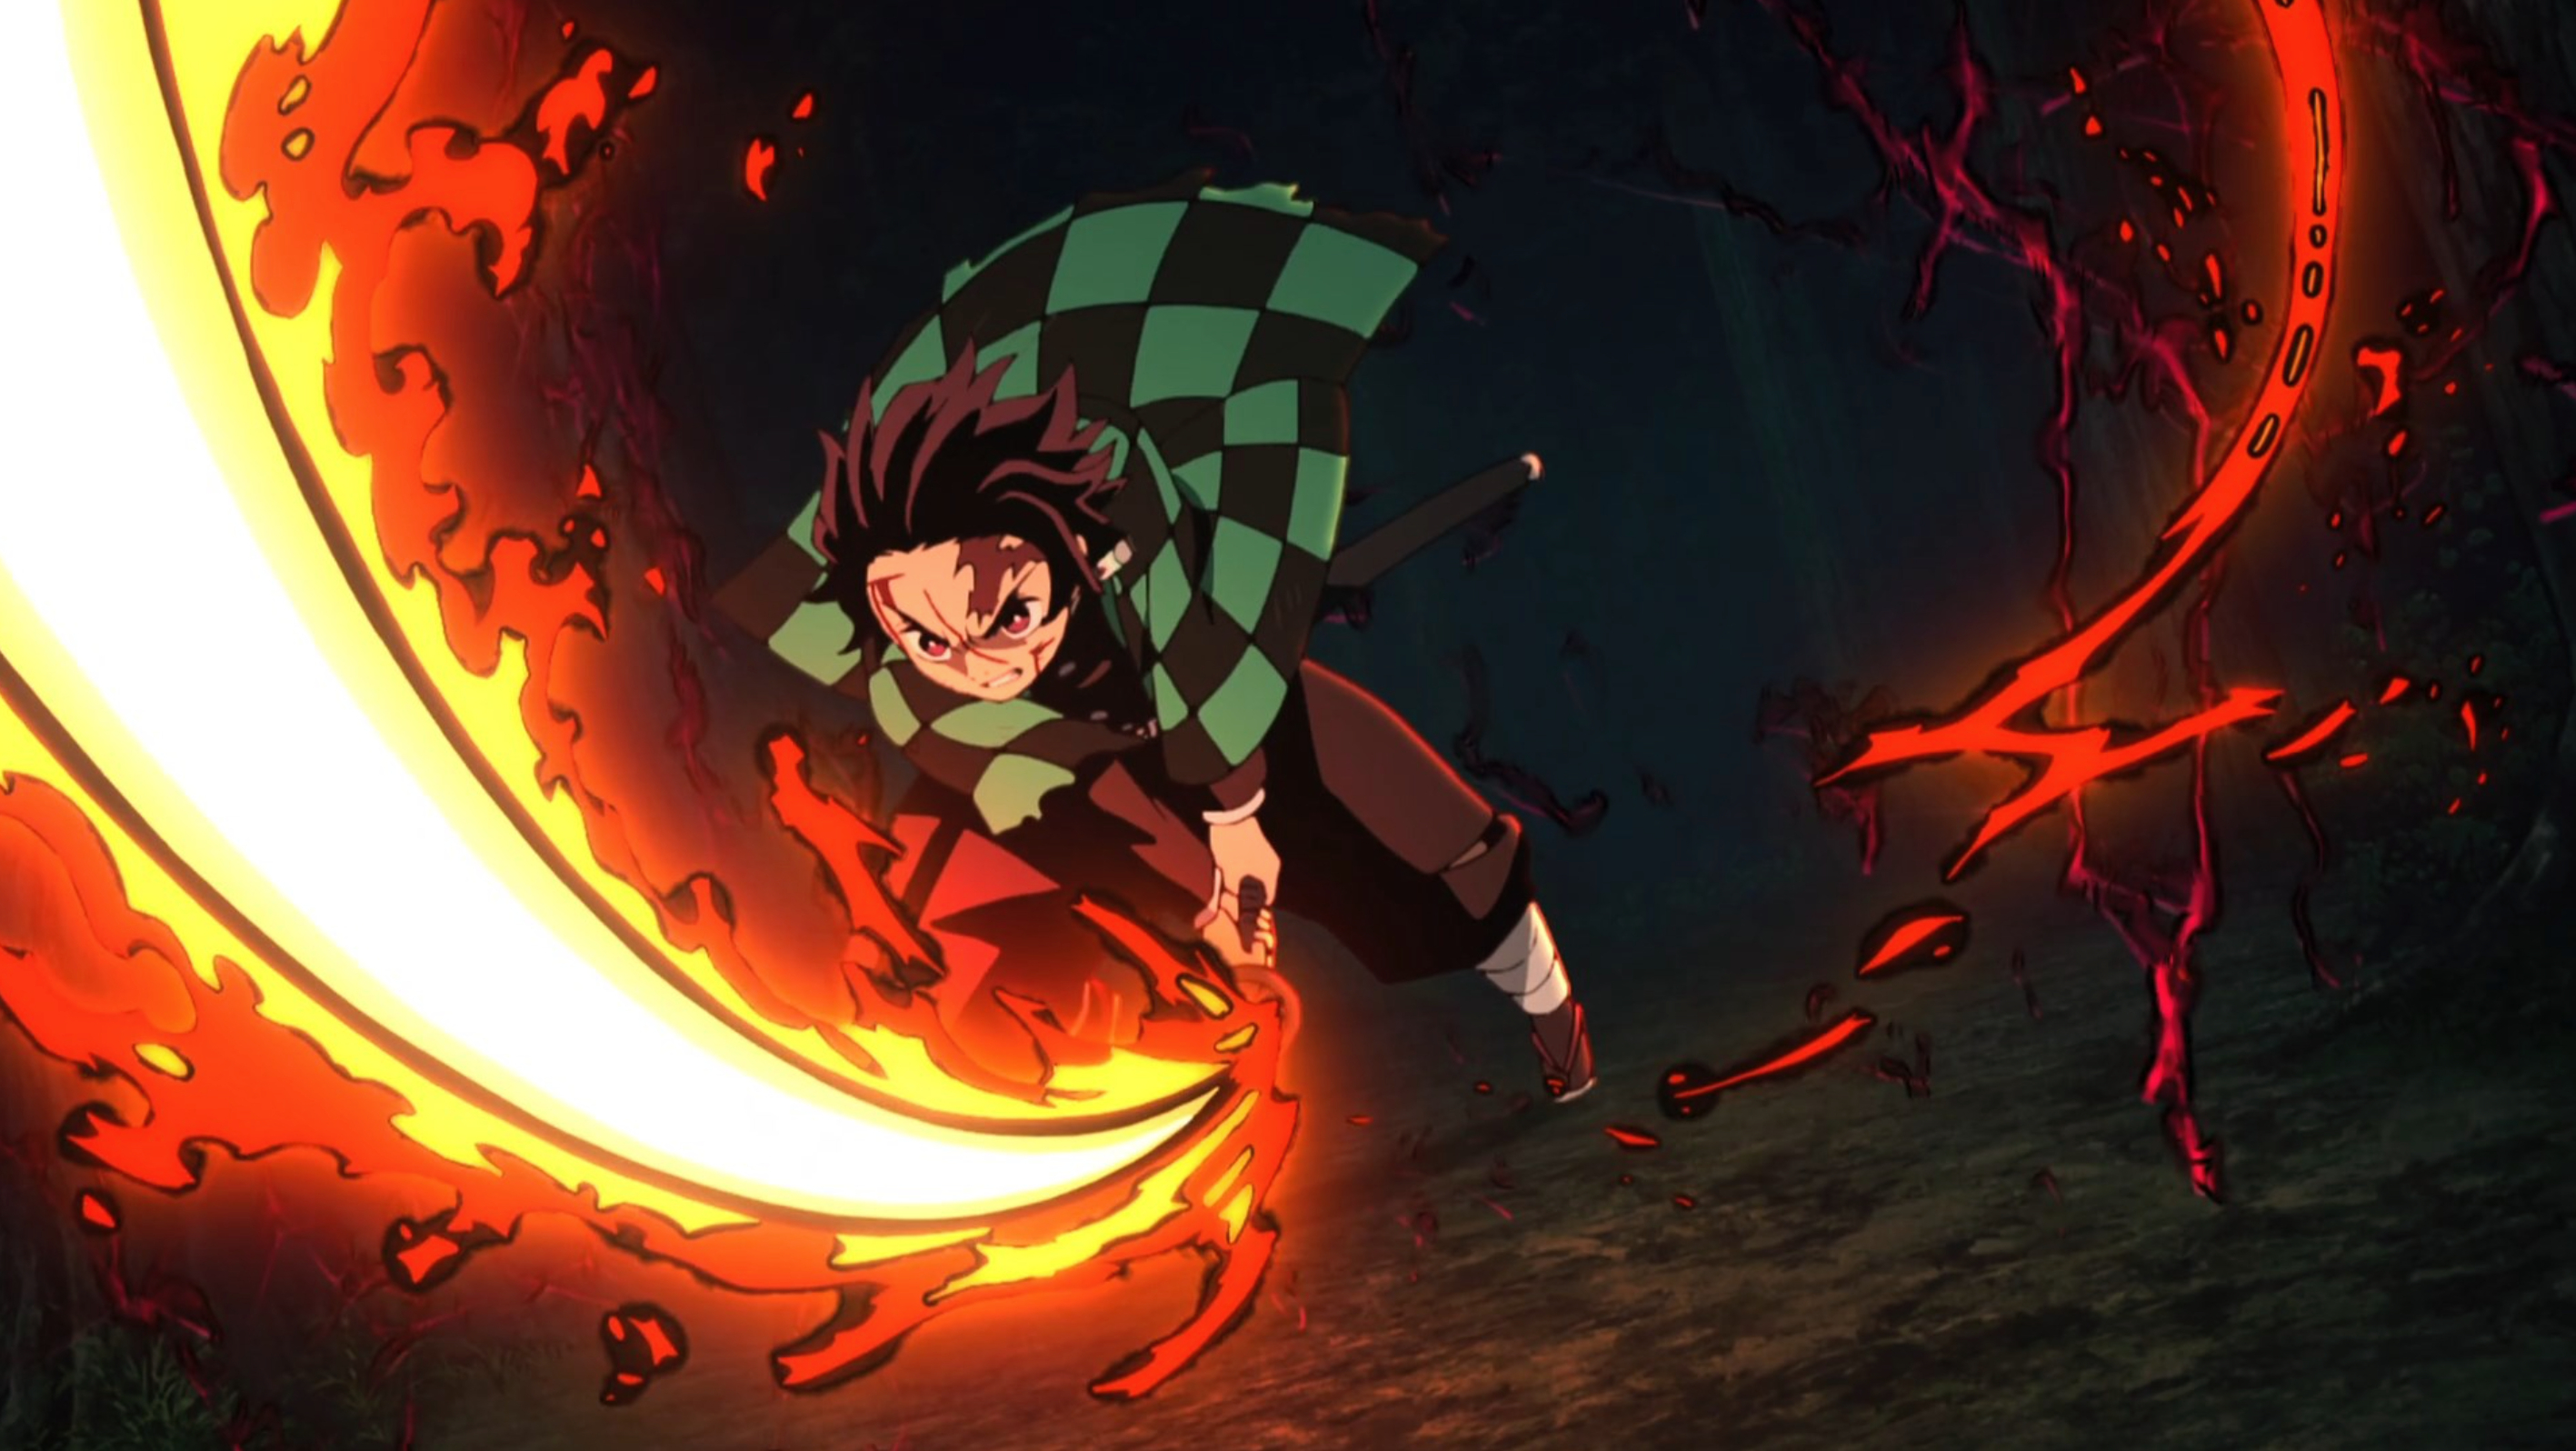 Tanjiro releasing circular flames from his sword while performing Hinokami Kagura